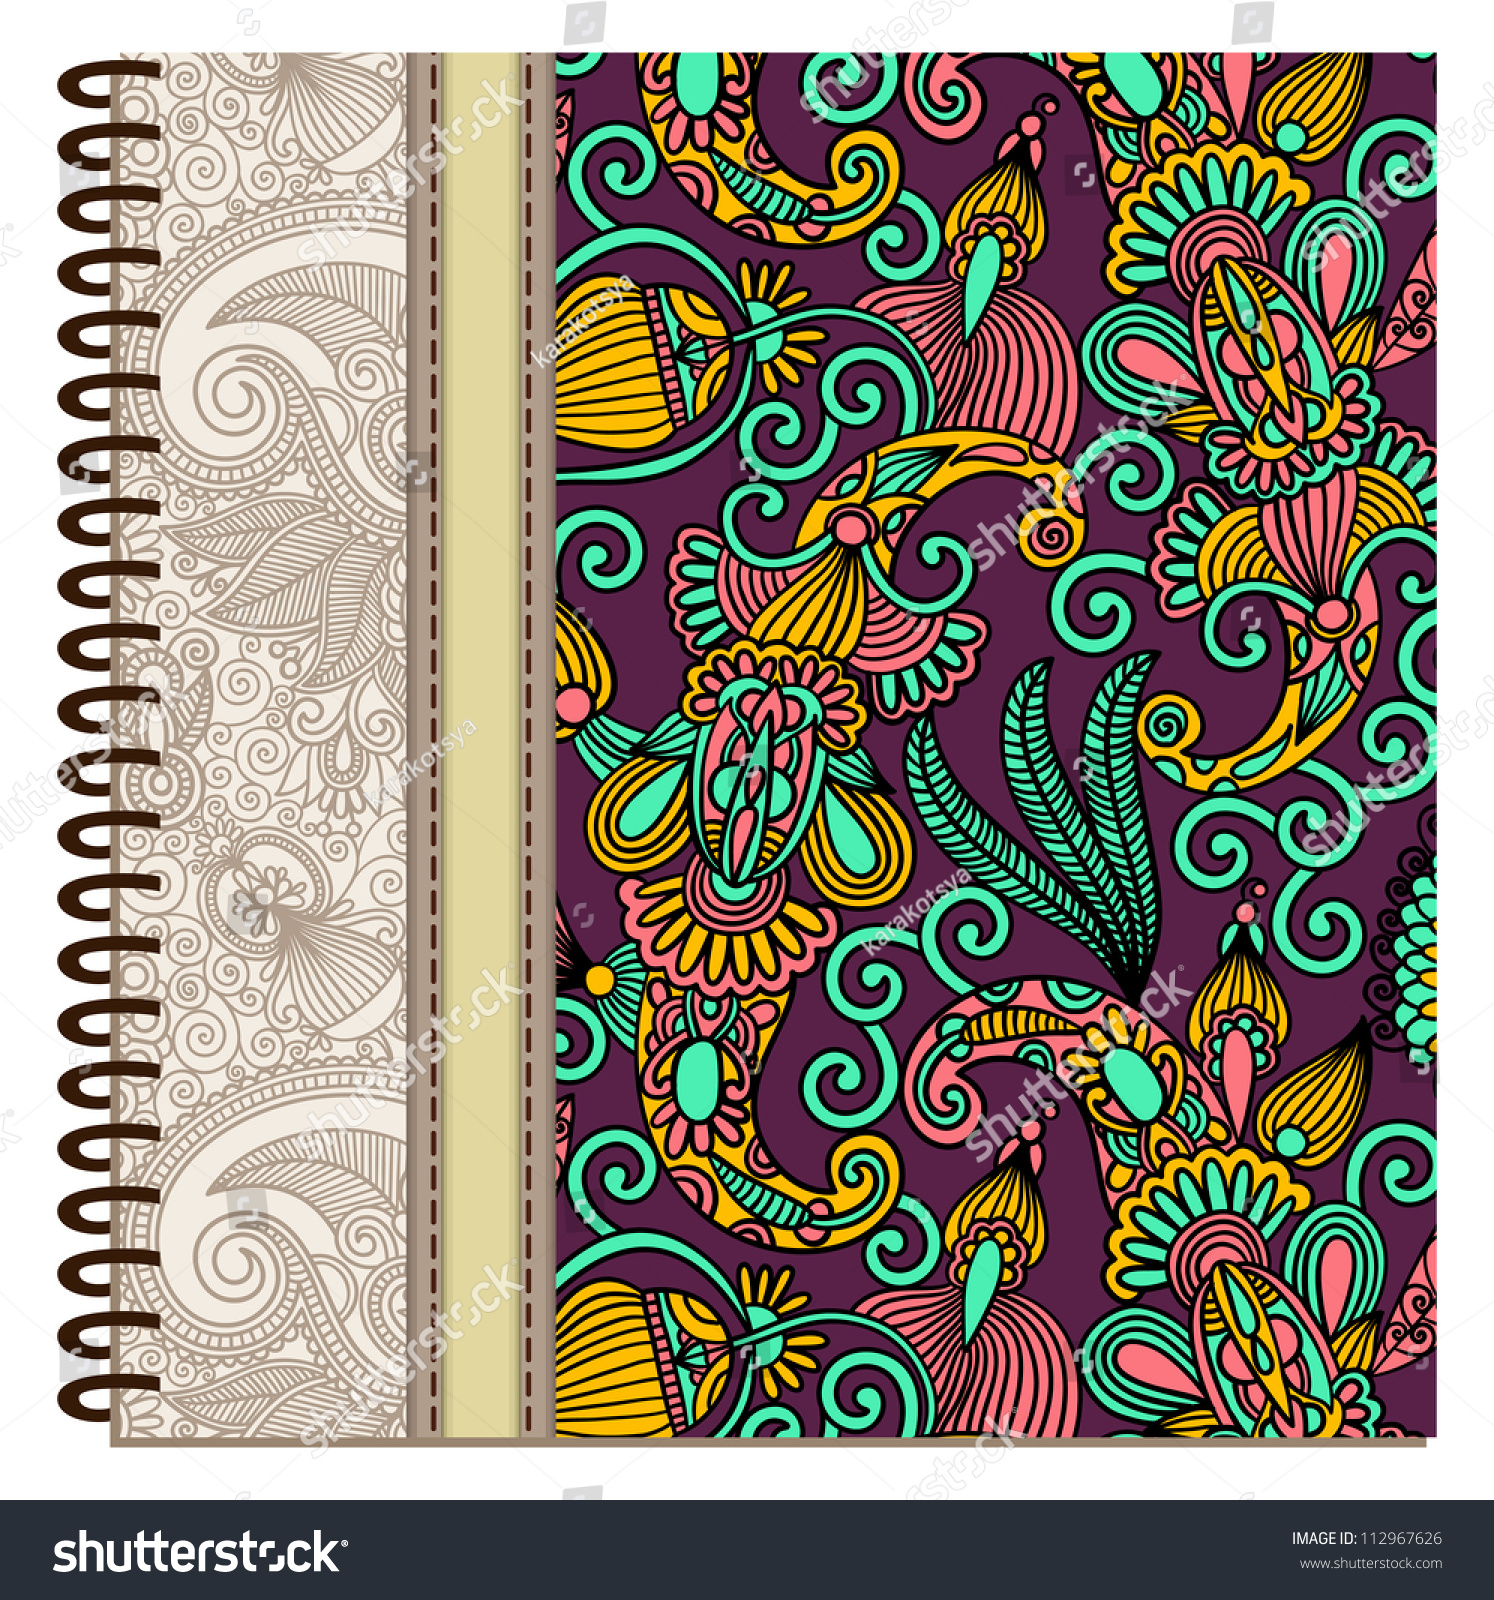 Design Of Spiral Ornamental Notebook Cover Stock Vector Illustration ...